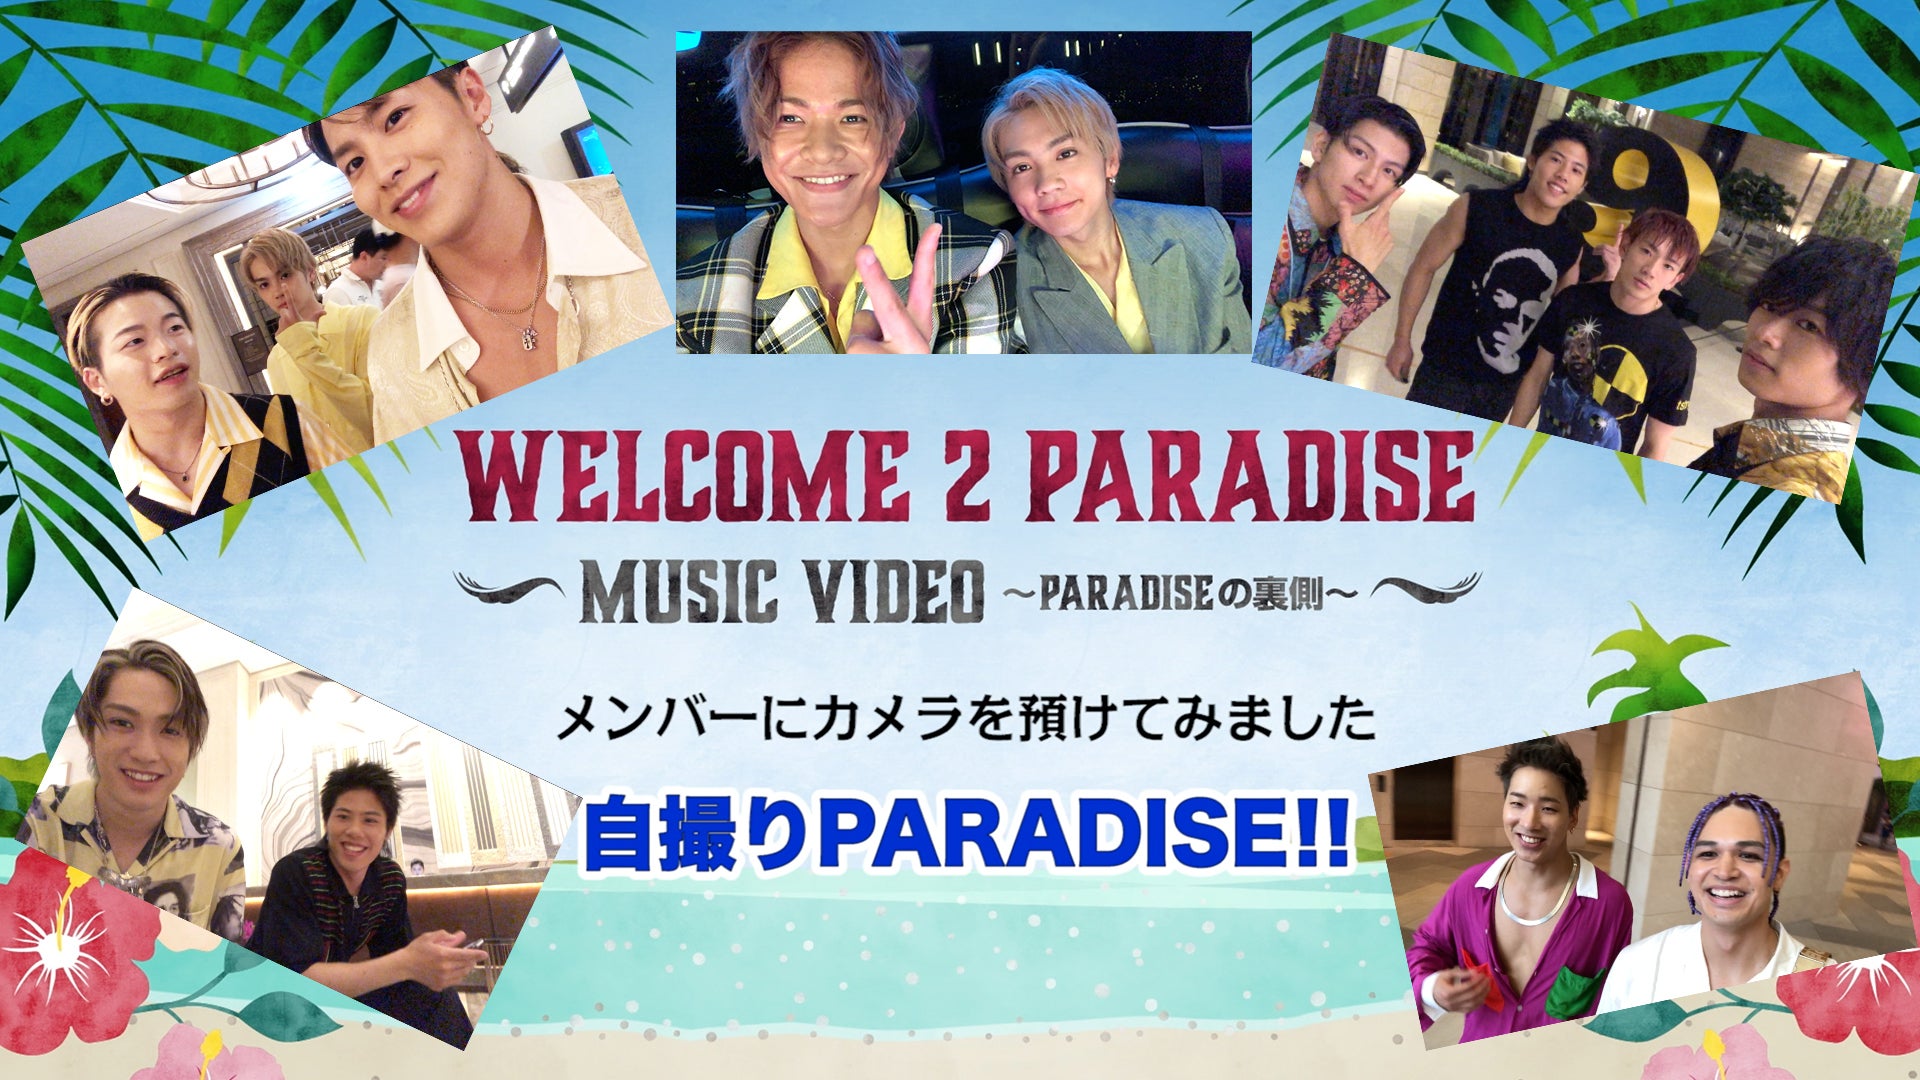 「WELCOME 2 PARADISE」MV密着〜自撮りパラダイス〜 2019/7/30(火)THE RAMPAGE